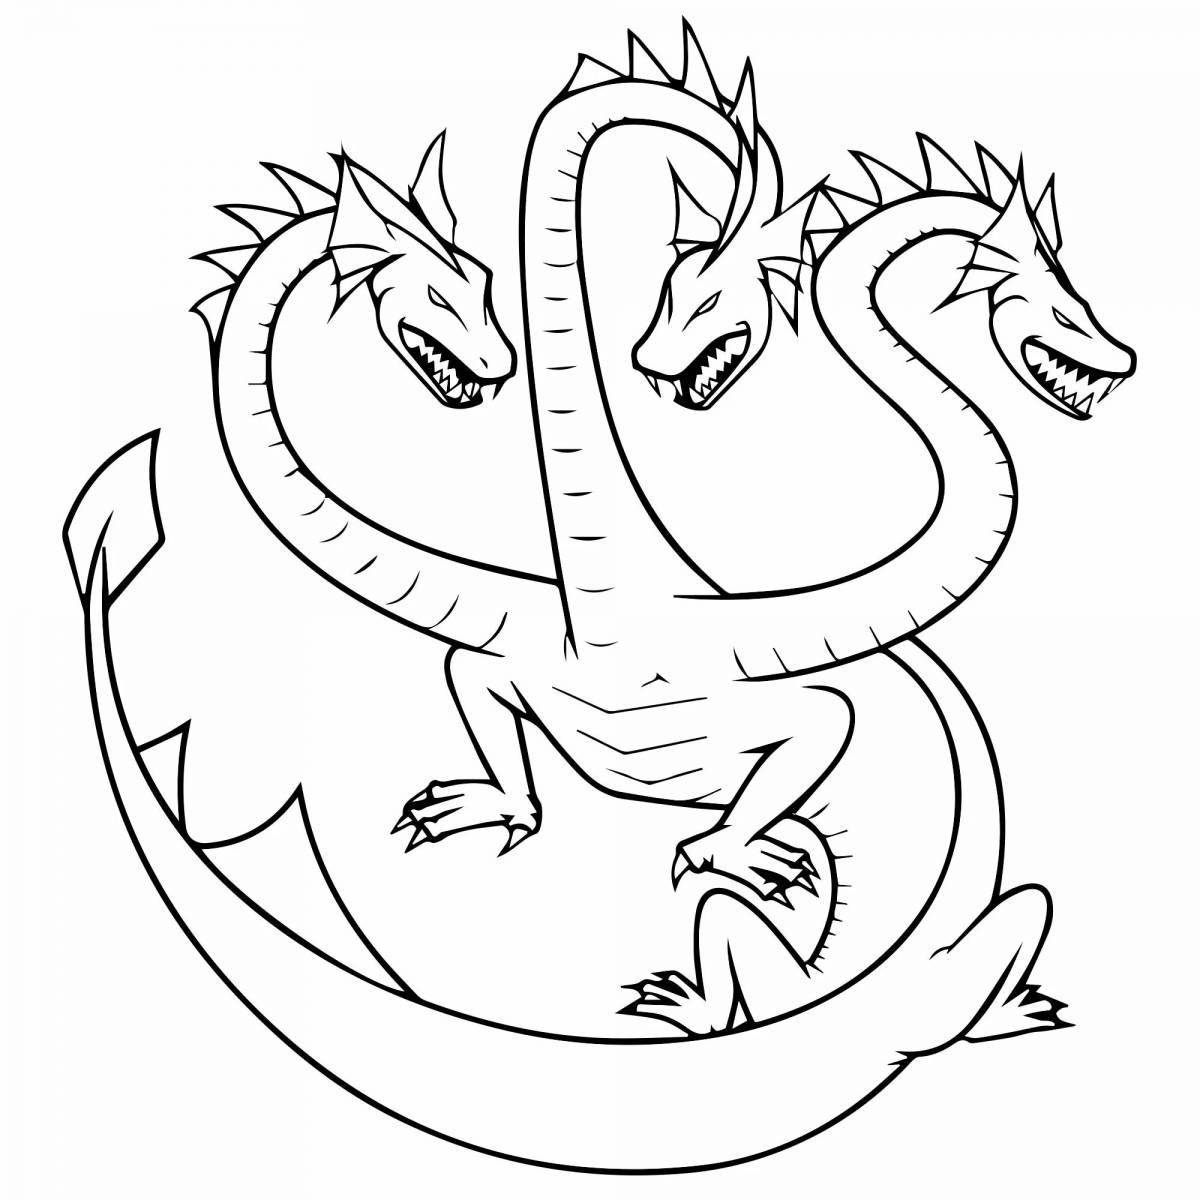 Coloring book fire three-headed dragon